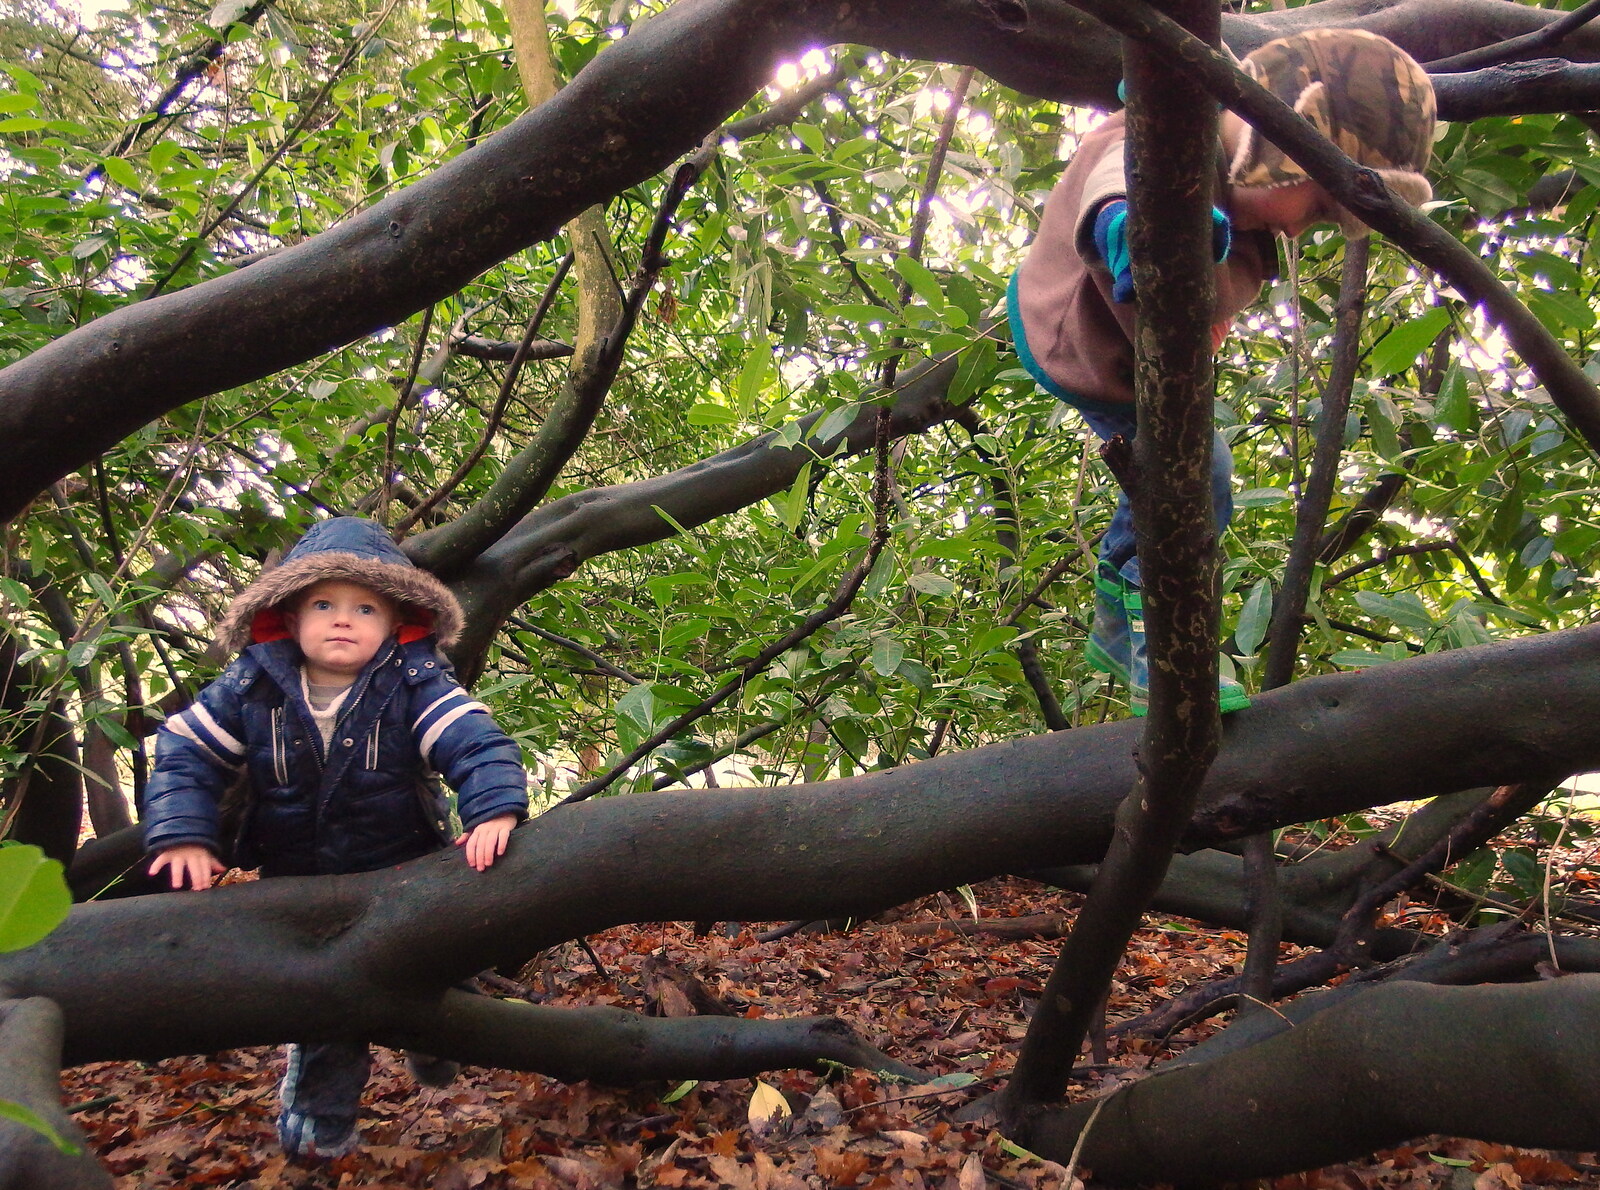 The boys climb a tree from A Boxing Day Walk, Thornham Estate, Suffolk - 26th December 2013